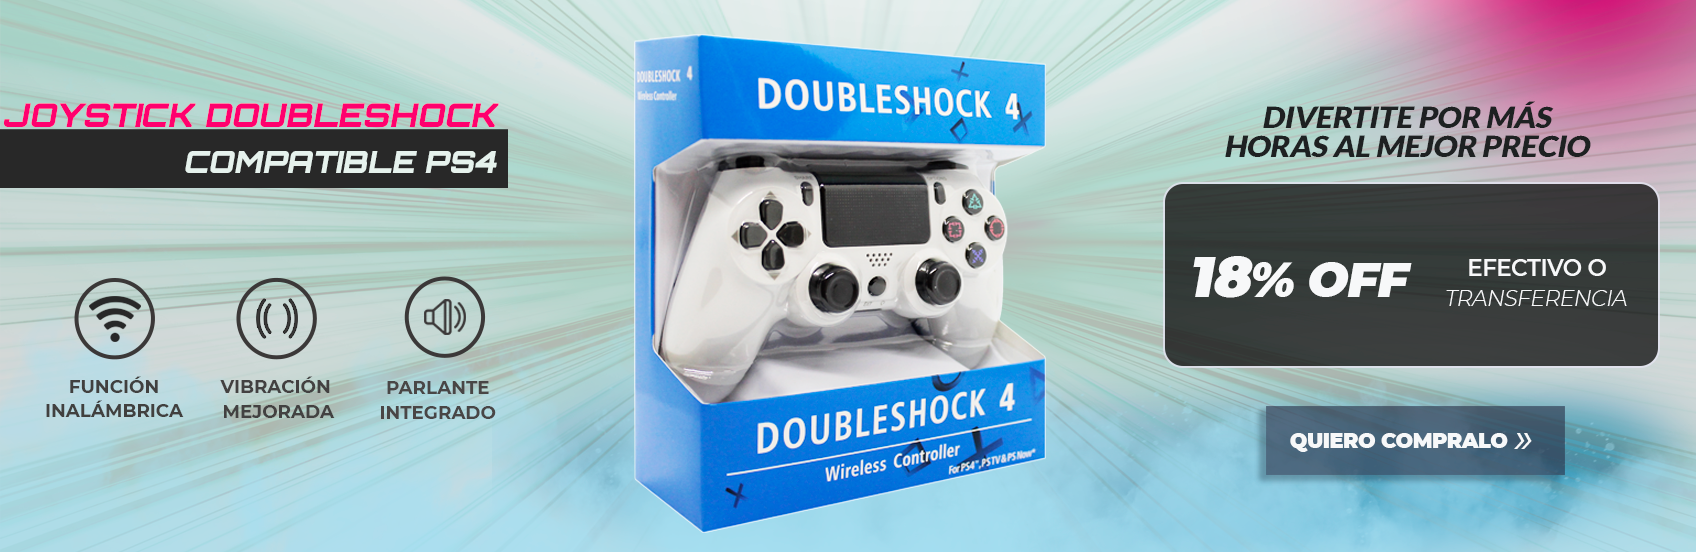 Joystick Doubleshock para PS4